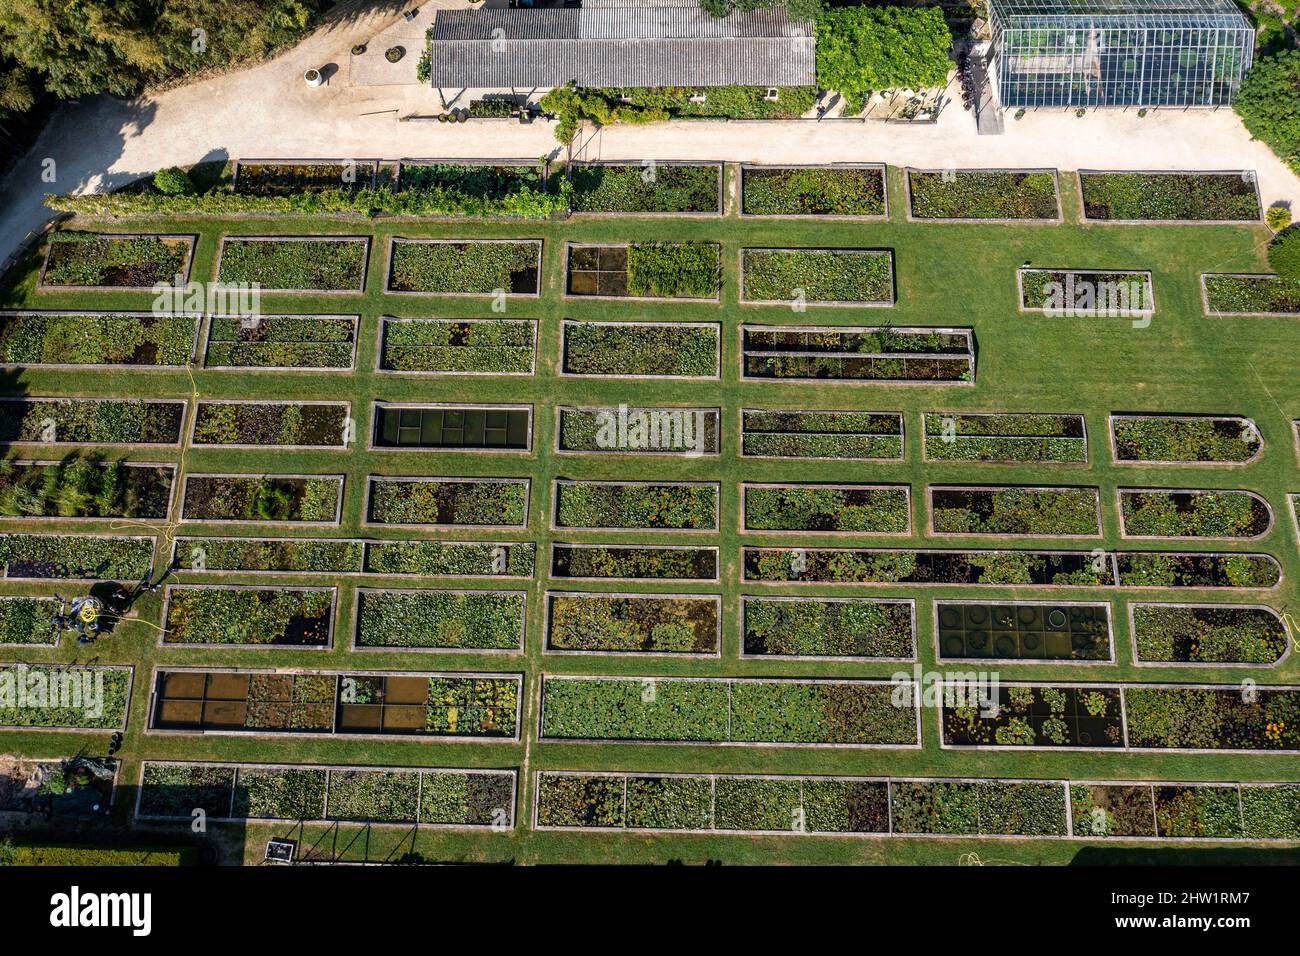 France, Lot et Garonne, Latour Marliac garden (aerial view) Stock Photo